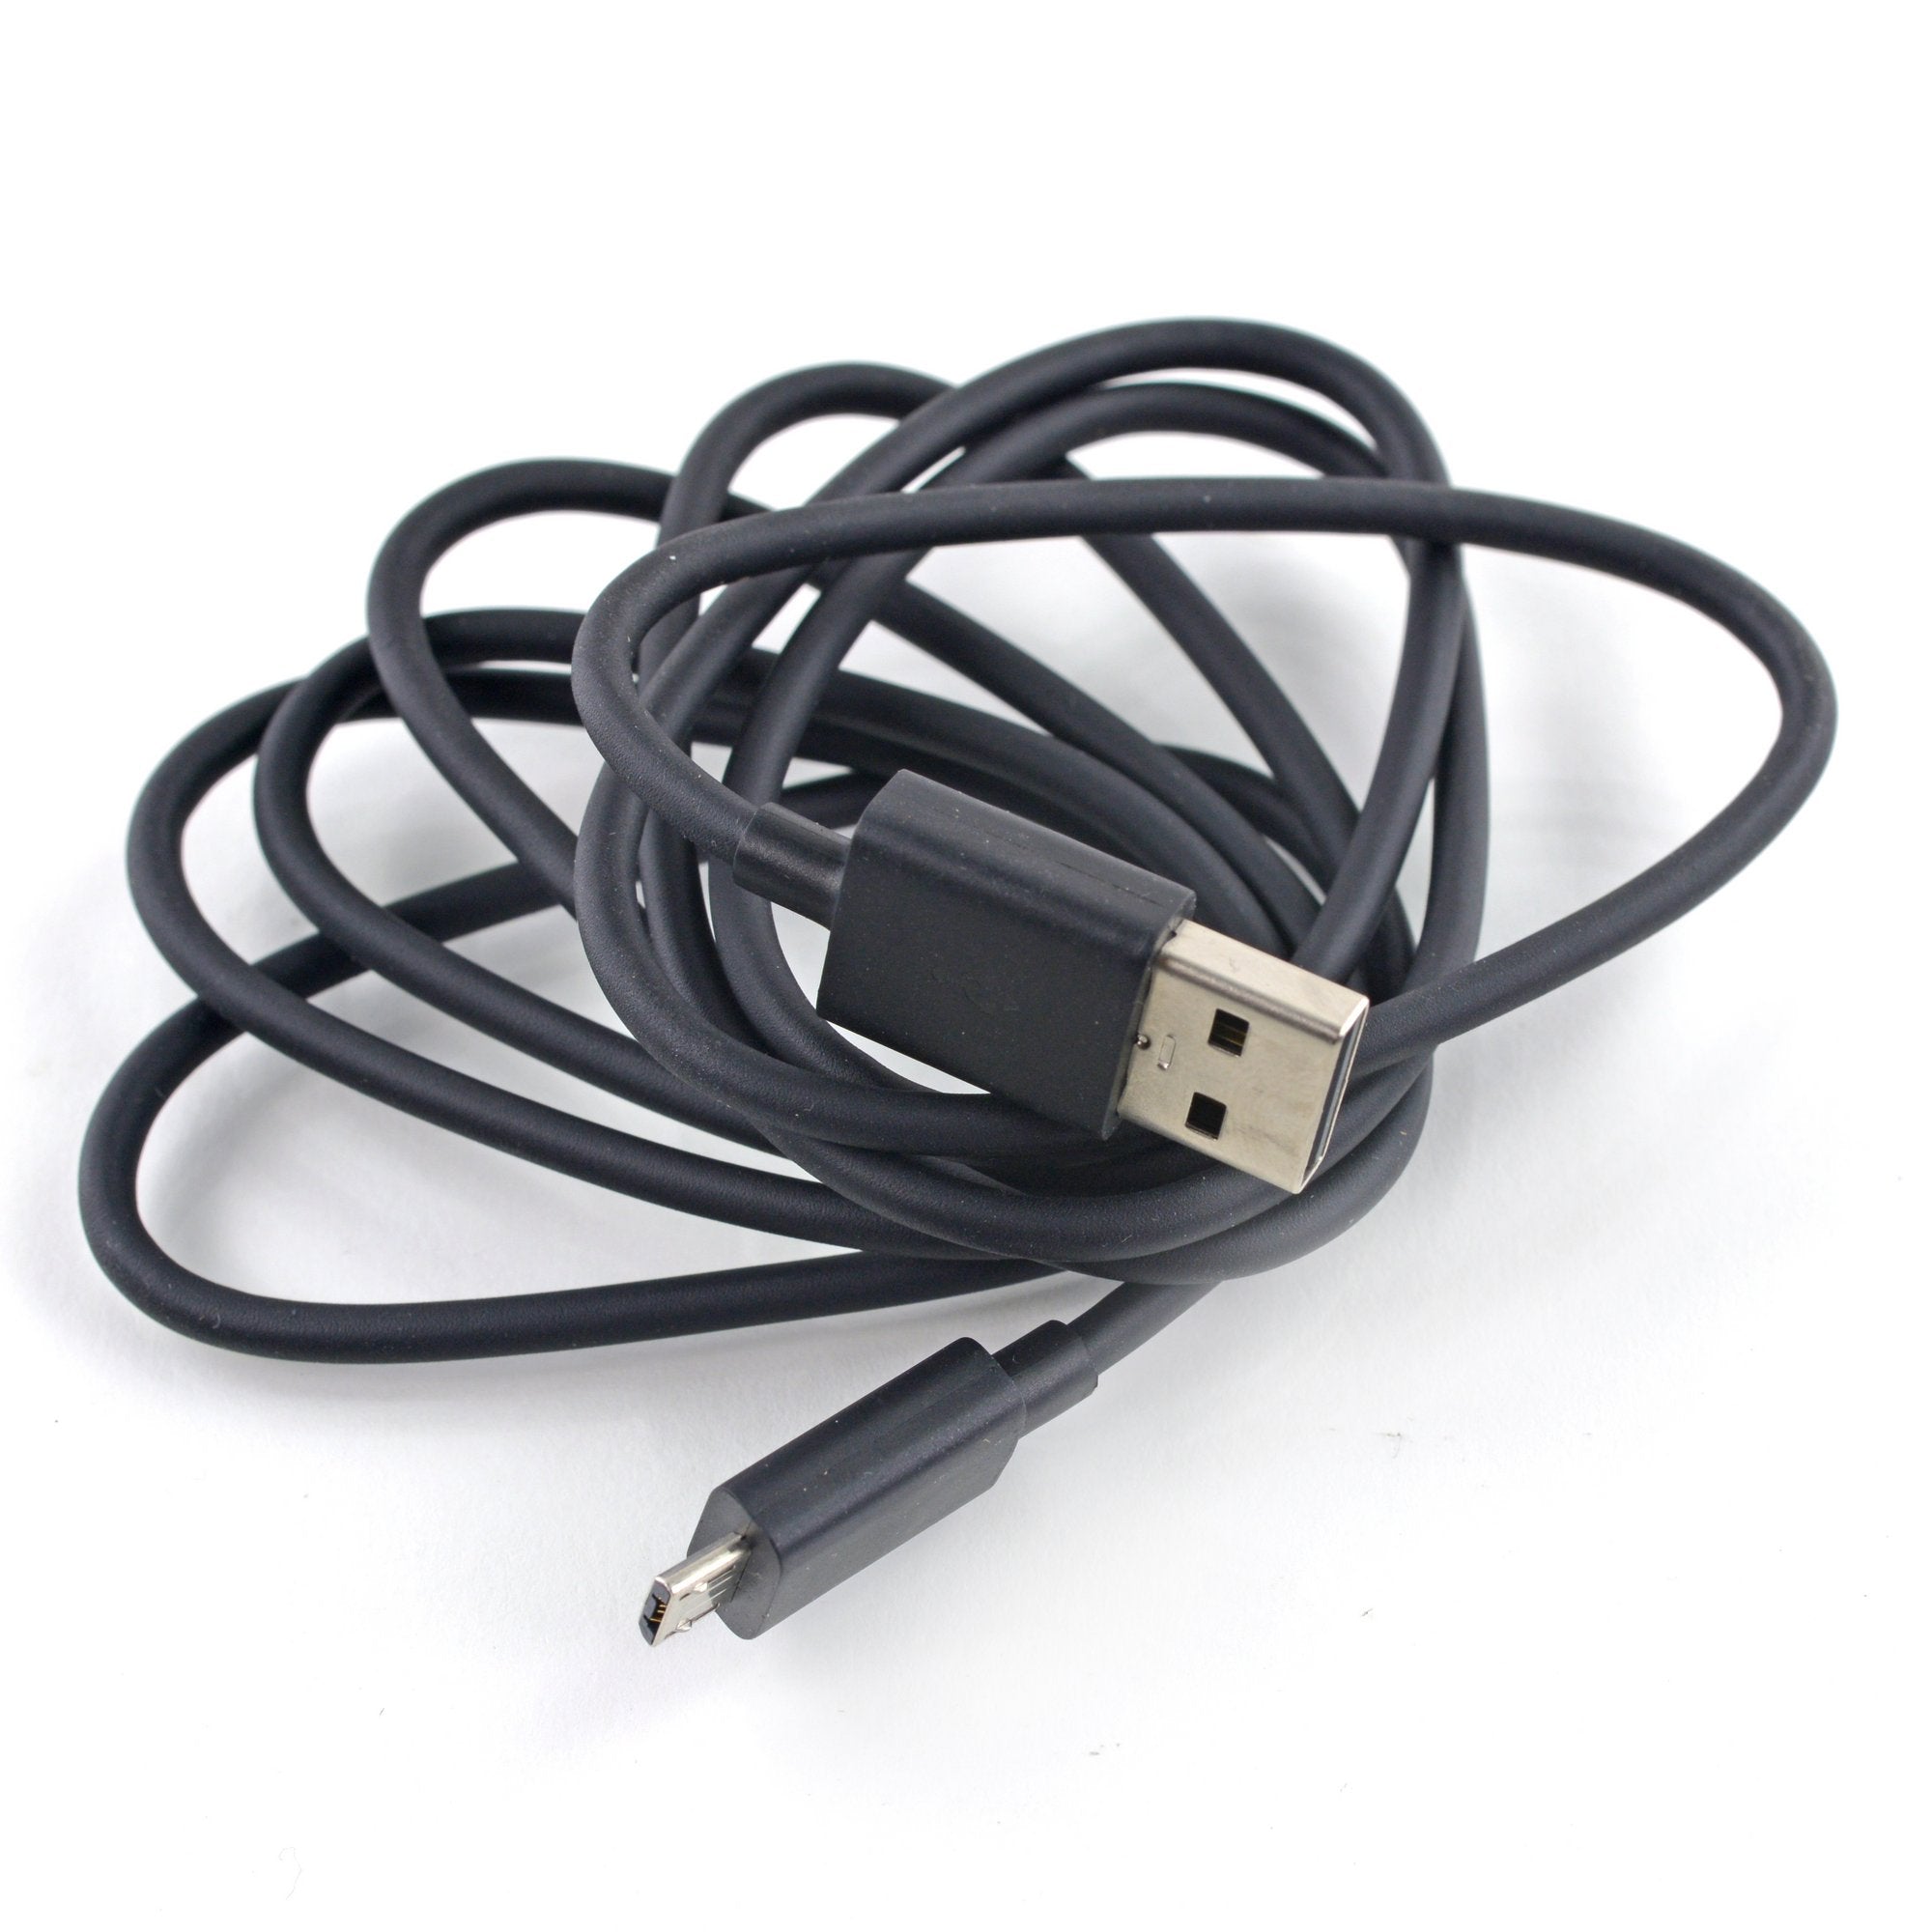 Kindle Fire HDX 8.9" AC Power USB Cable